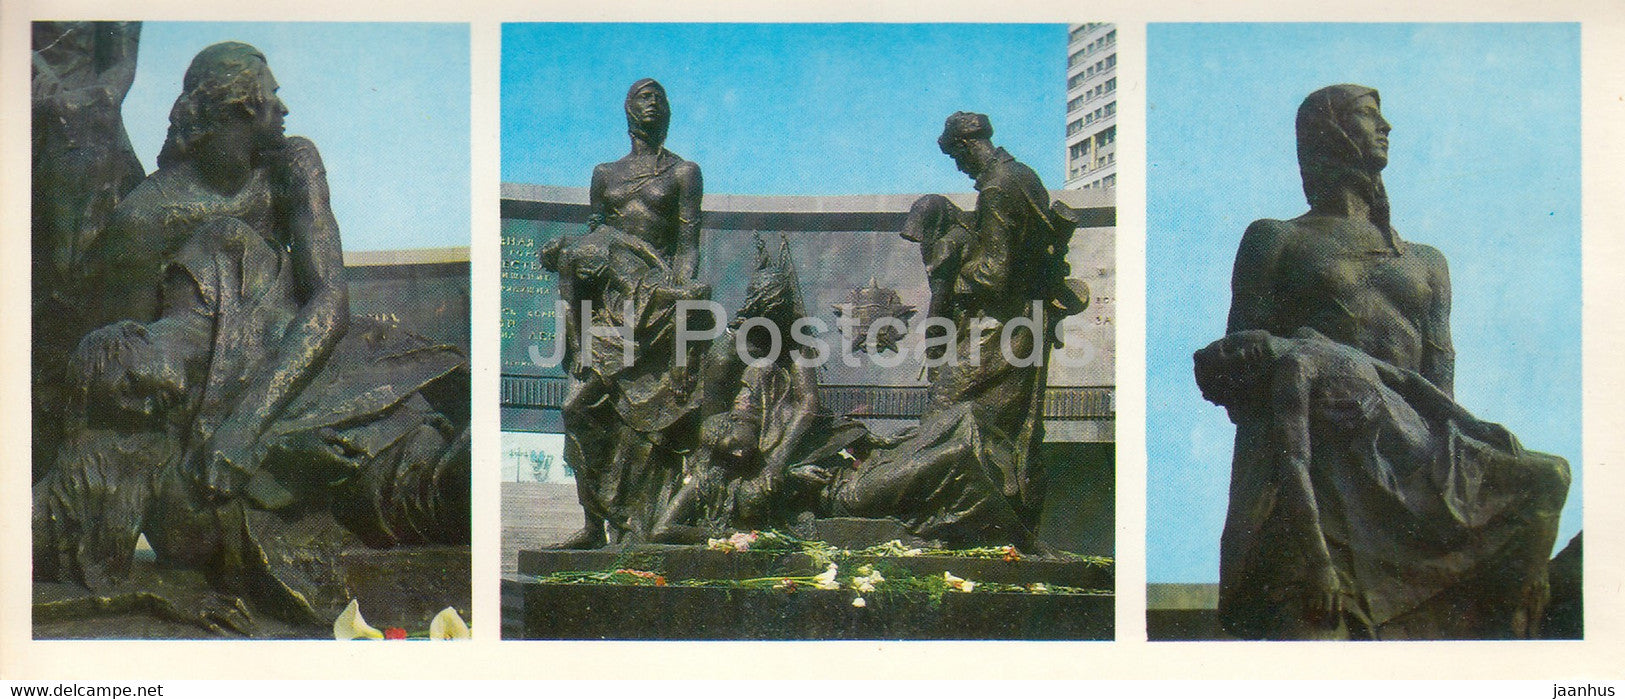 Monument to the Heroic Defenders of Leningrad - Blockade - memorial - 1976 - Russia USSR - unused - JH Postcards